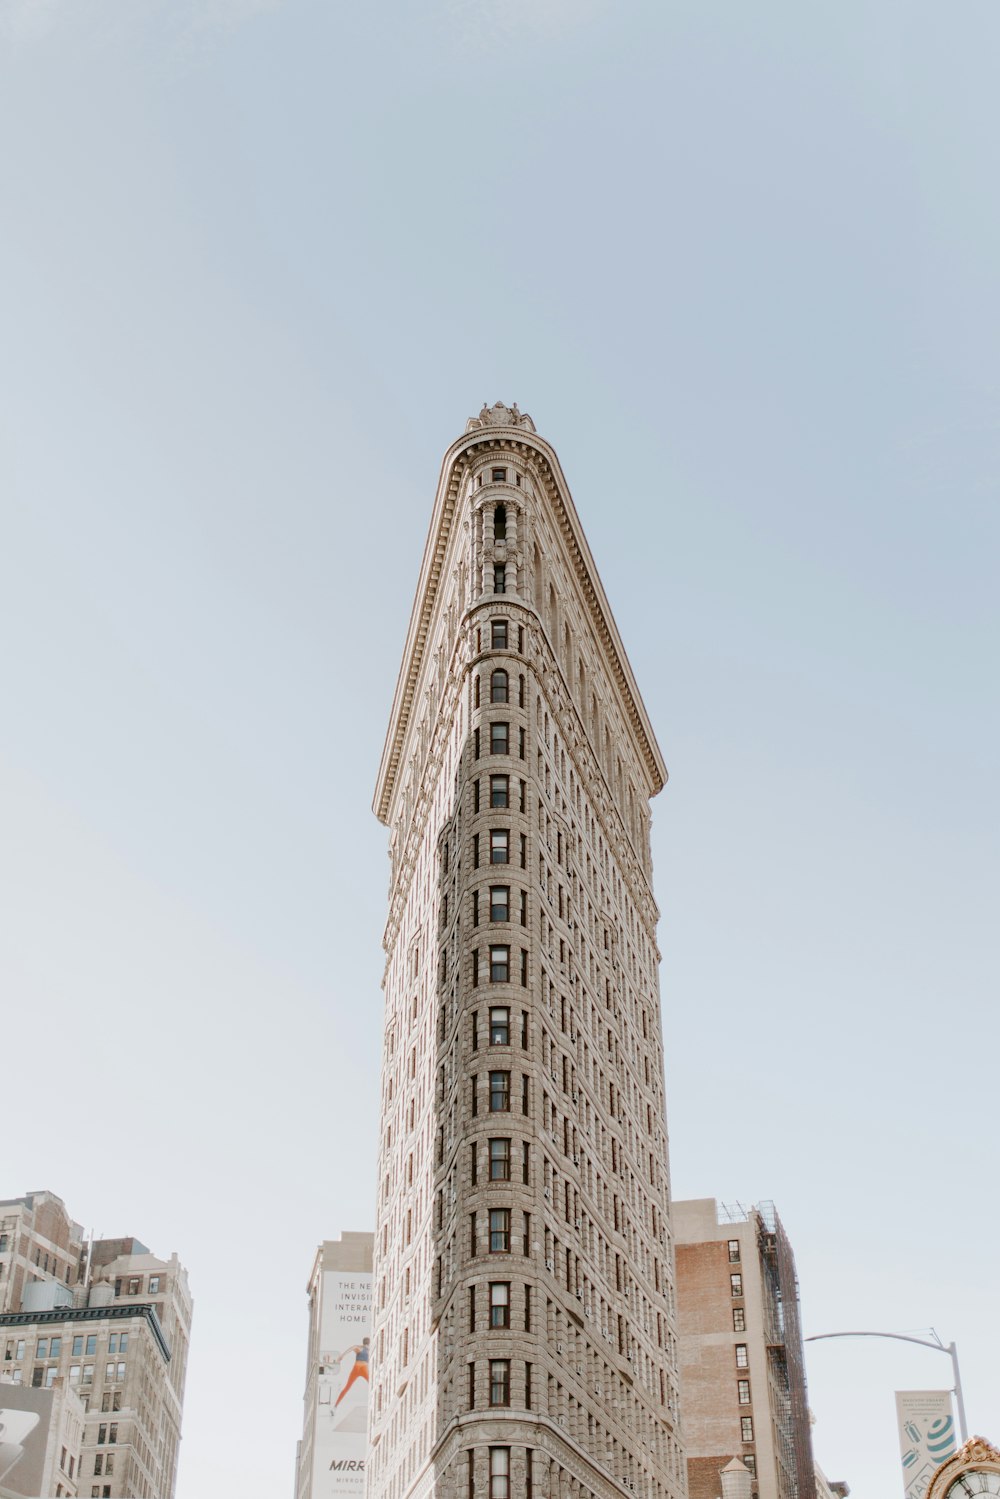 Immeuble Flat Iron, New York